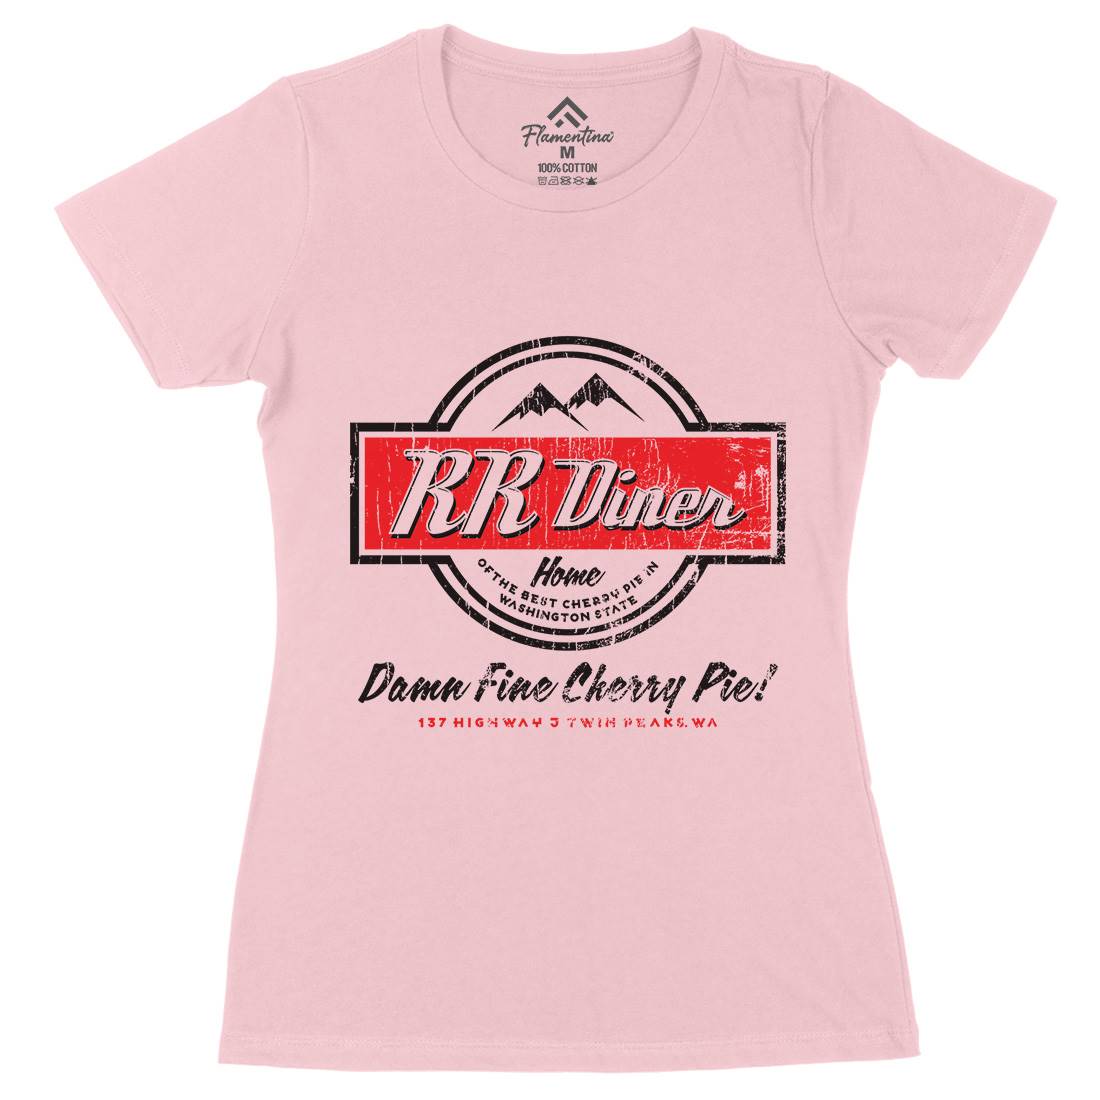 Double Rr Diner Womens Organic Crew Neck T-Shirt Horror D335